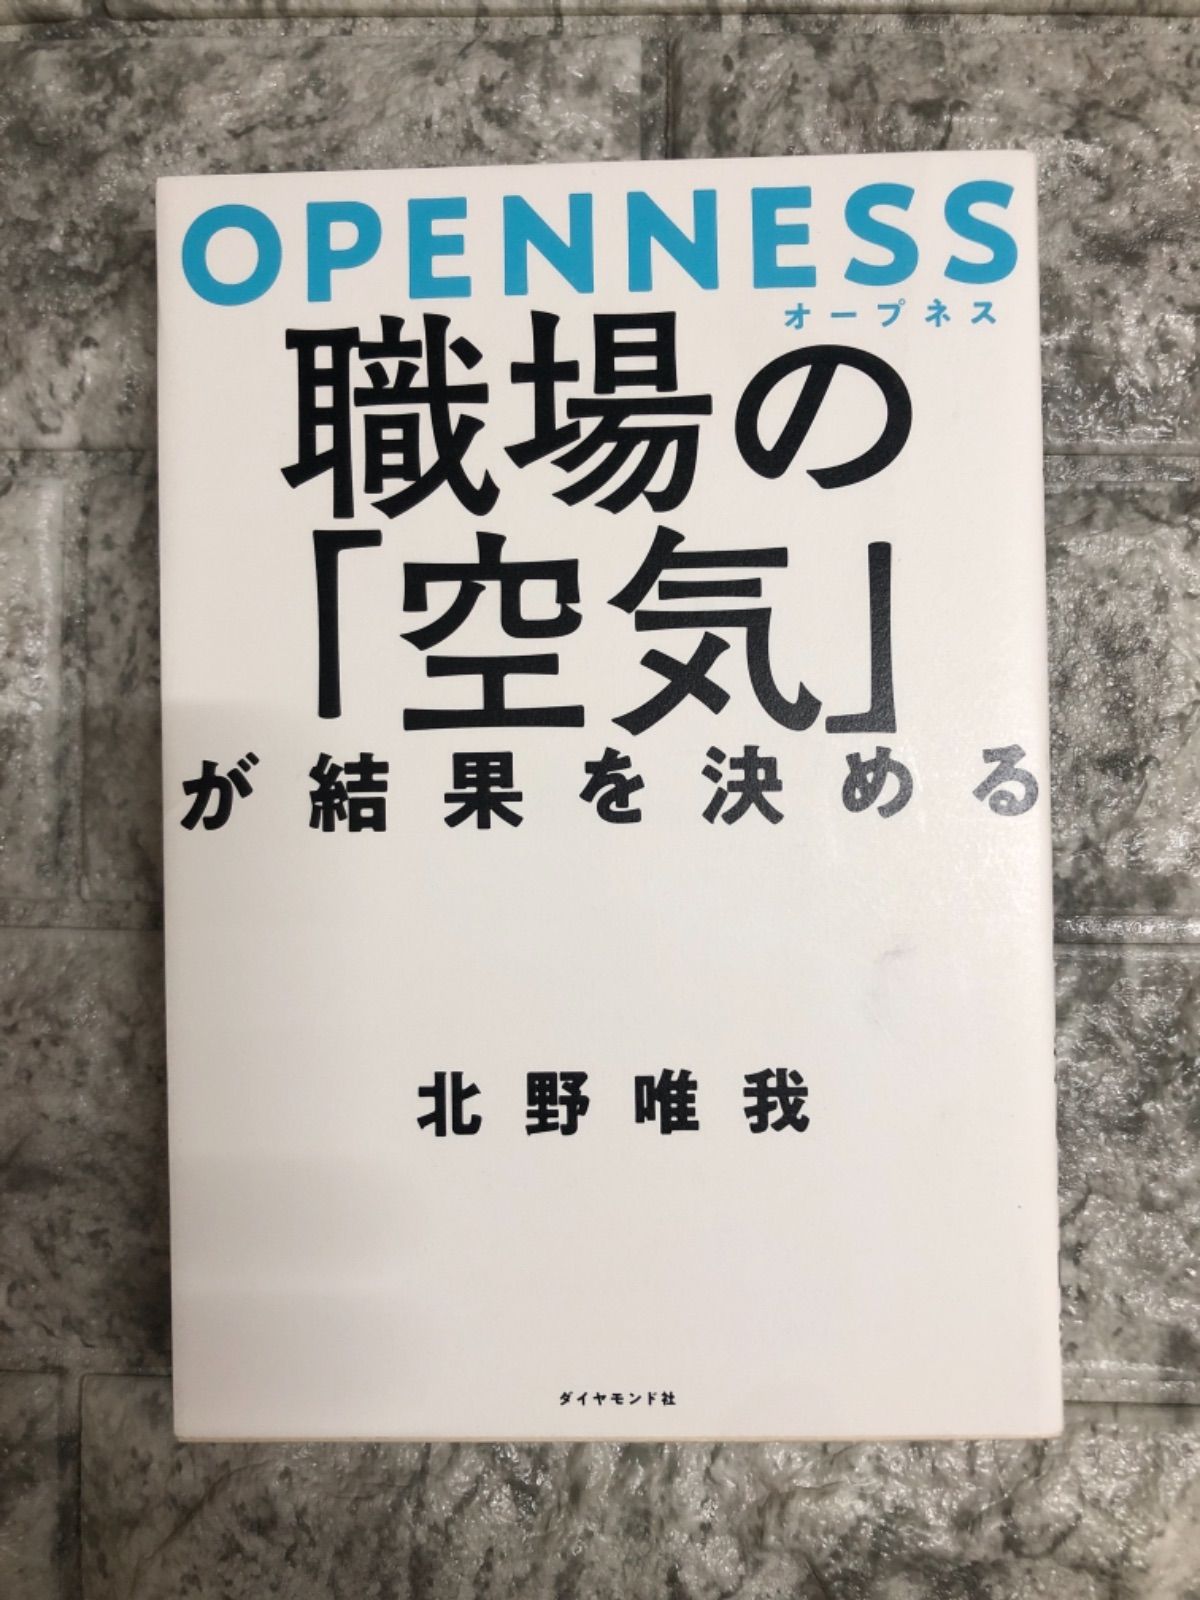 OPENNESS(オープネス)　職場の「空気」が結果を決める　HJ　Book　Store【防水仕様】　メルカリ